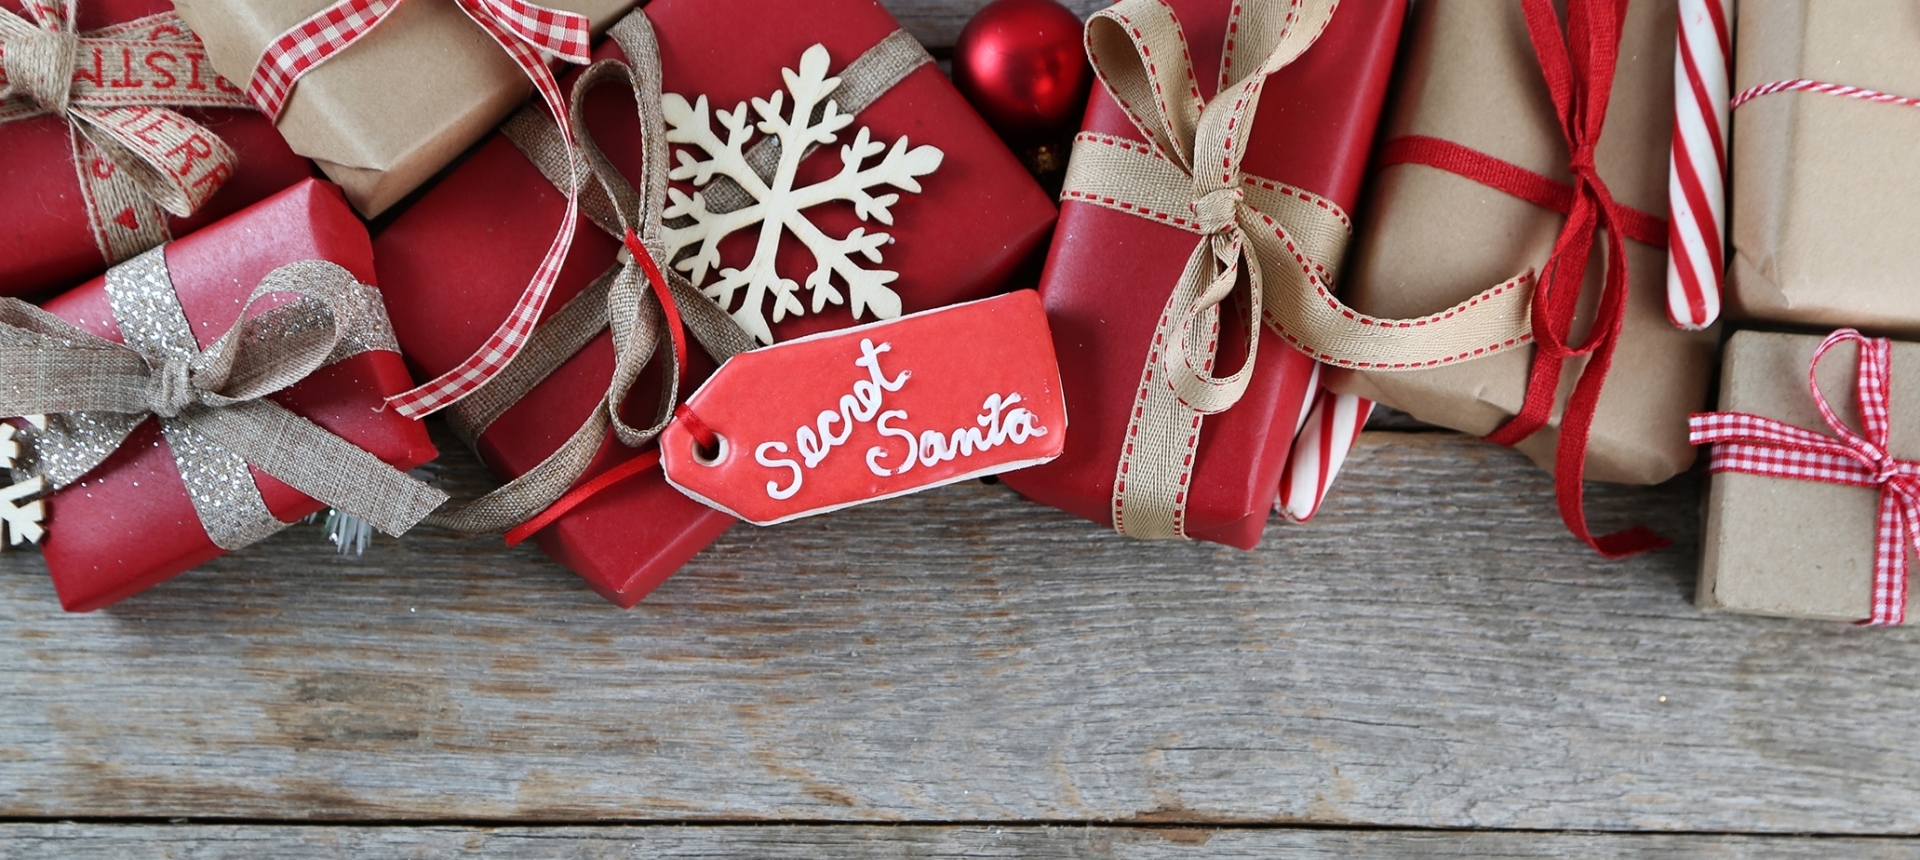 Santa with Gift Box Pop Up Card - Xmas Pop Up Card Wholesale